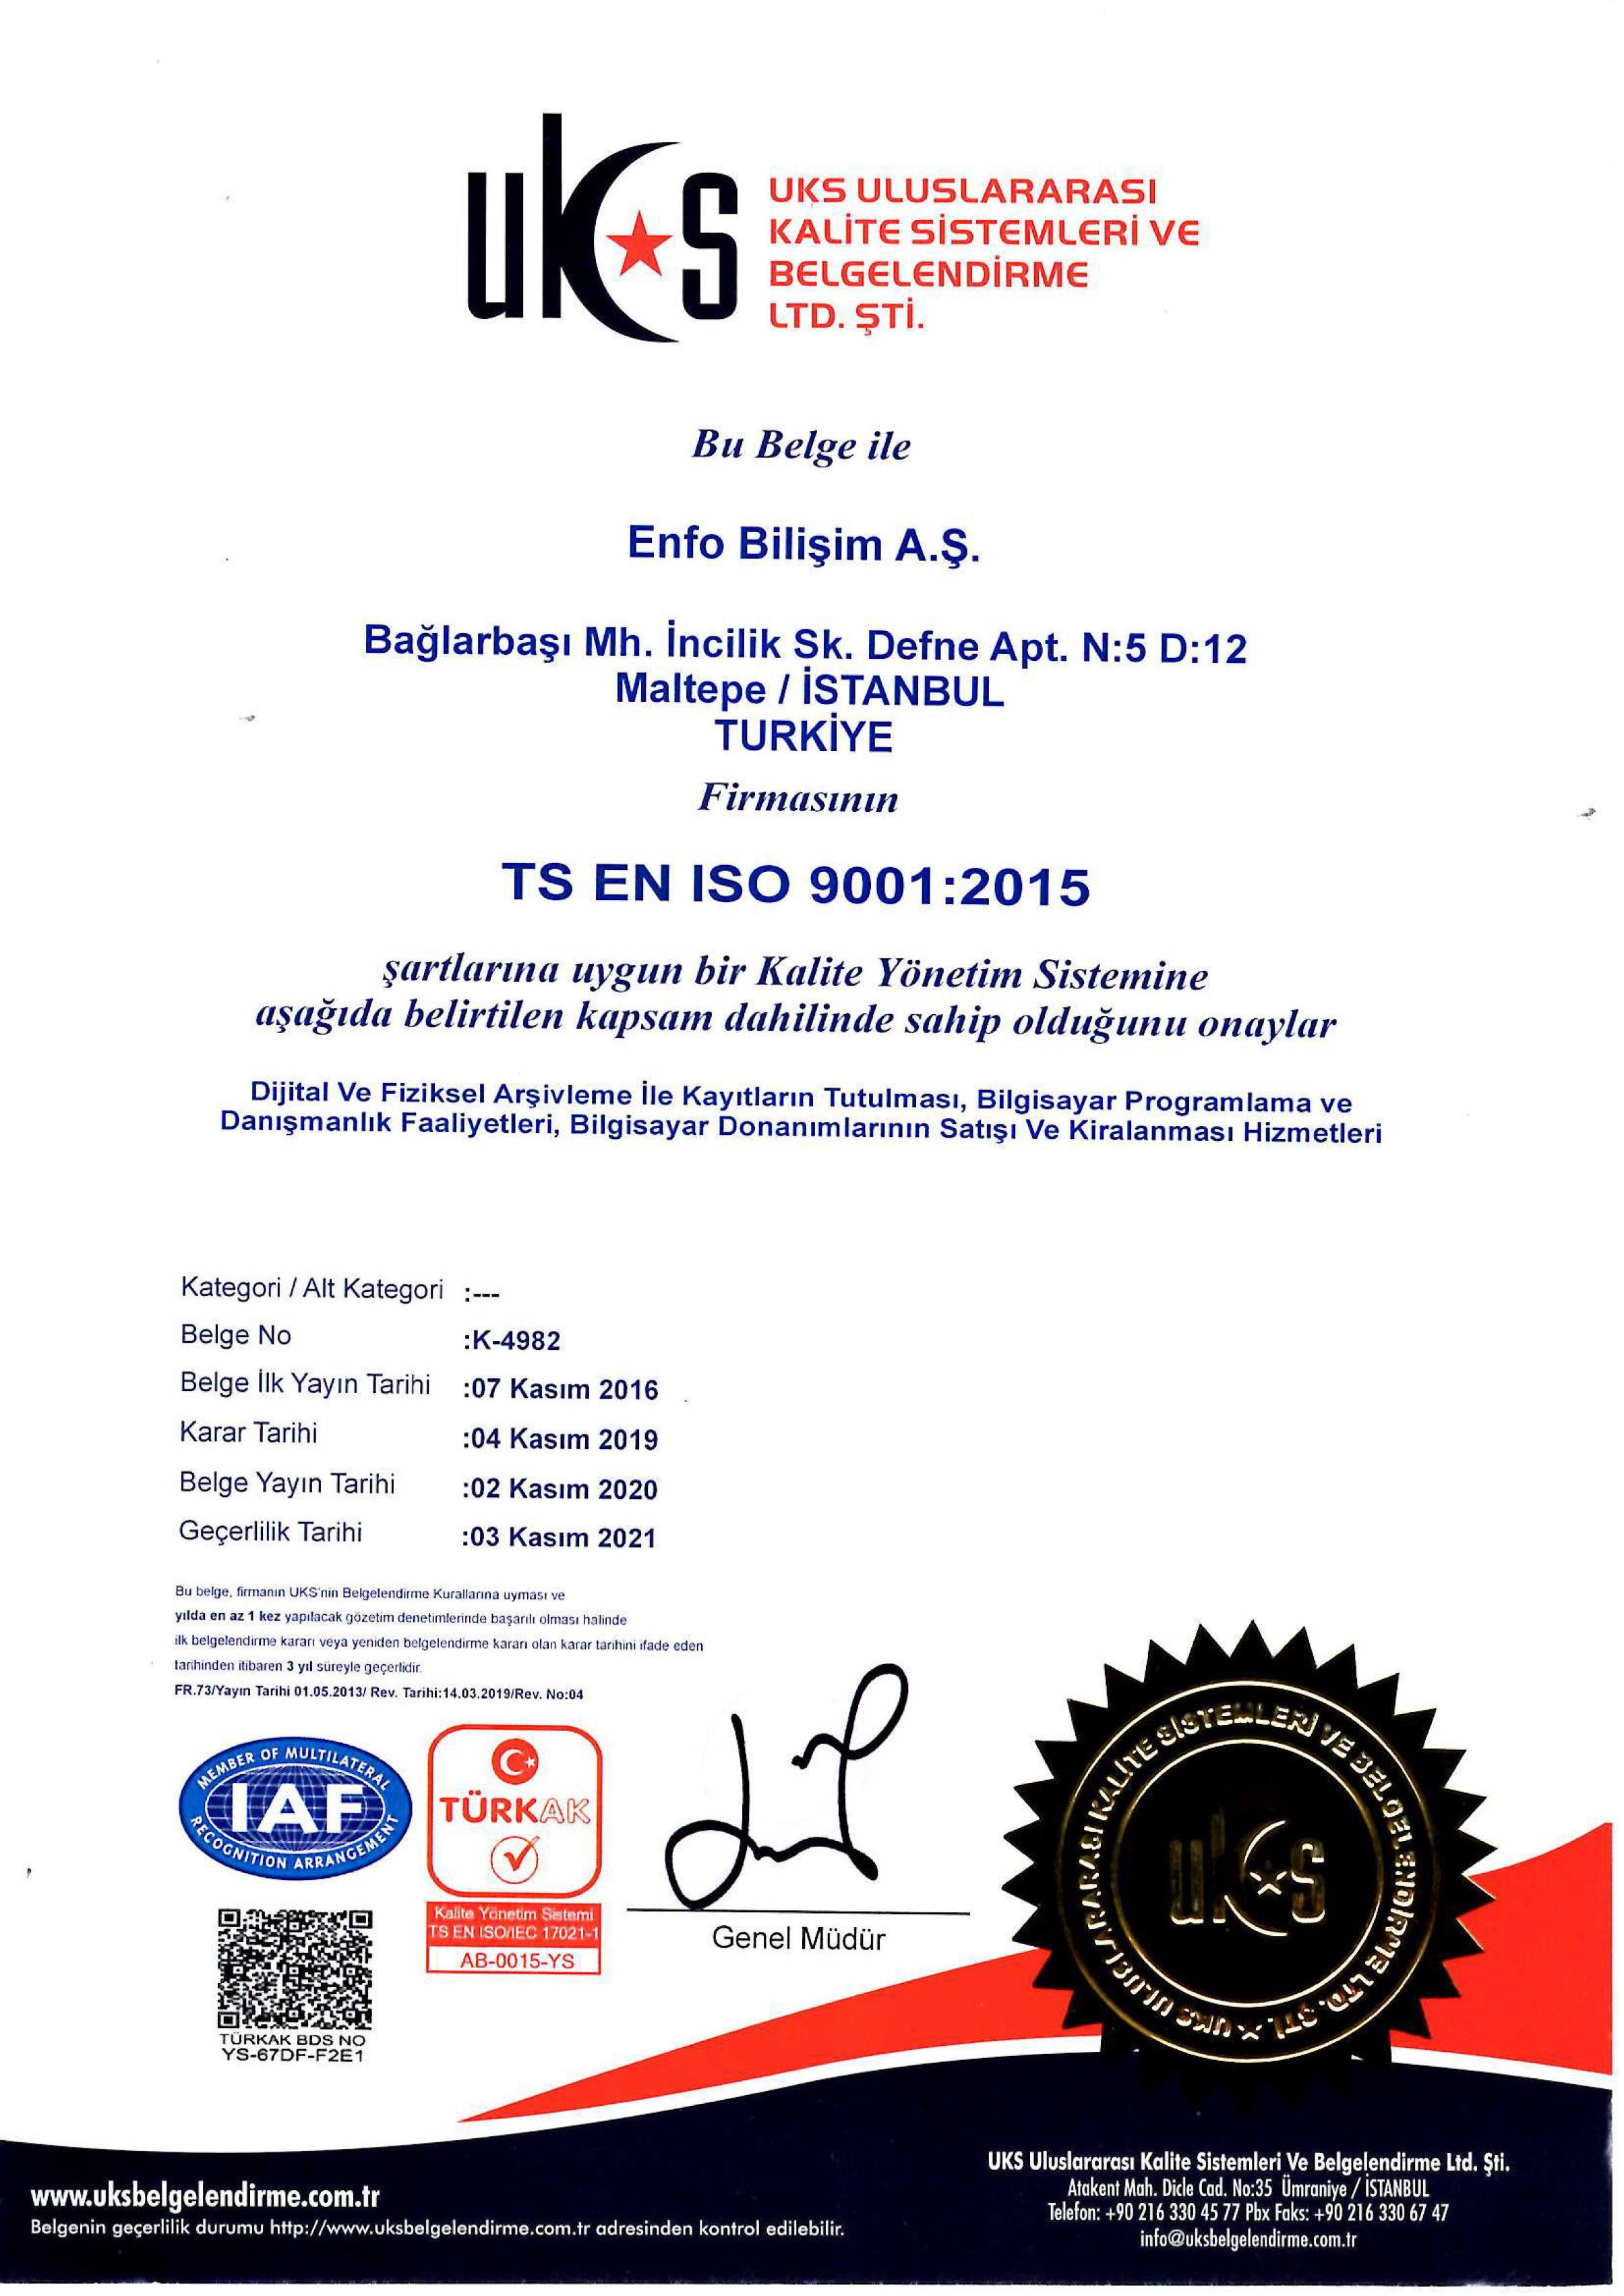 Quality Certificates | Enfo Bilişim